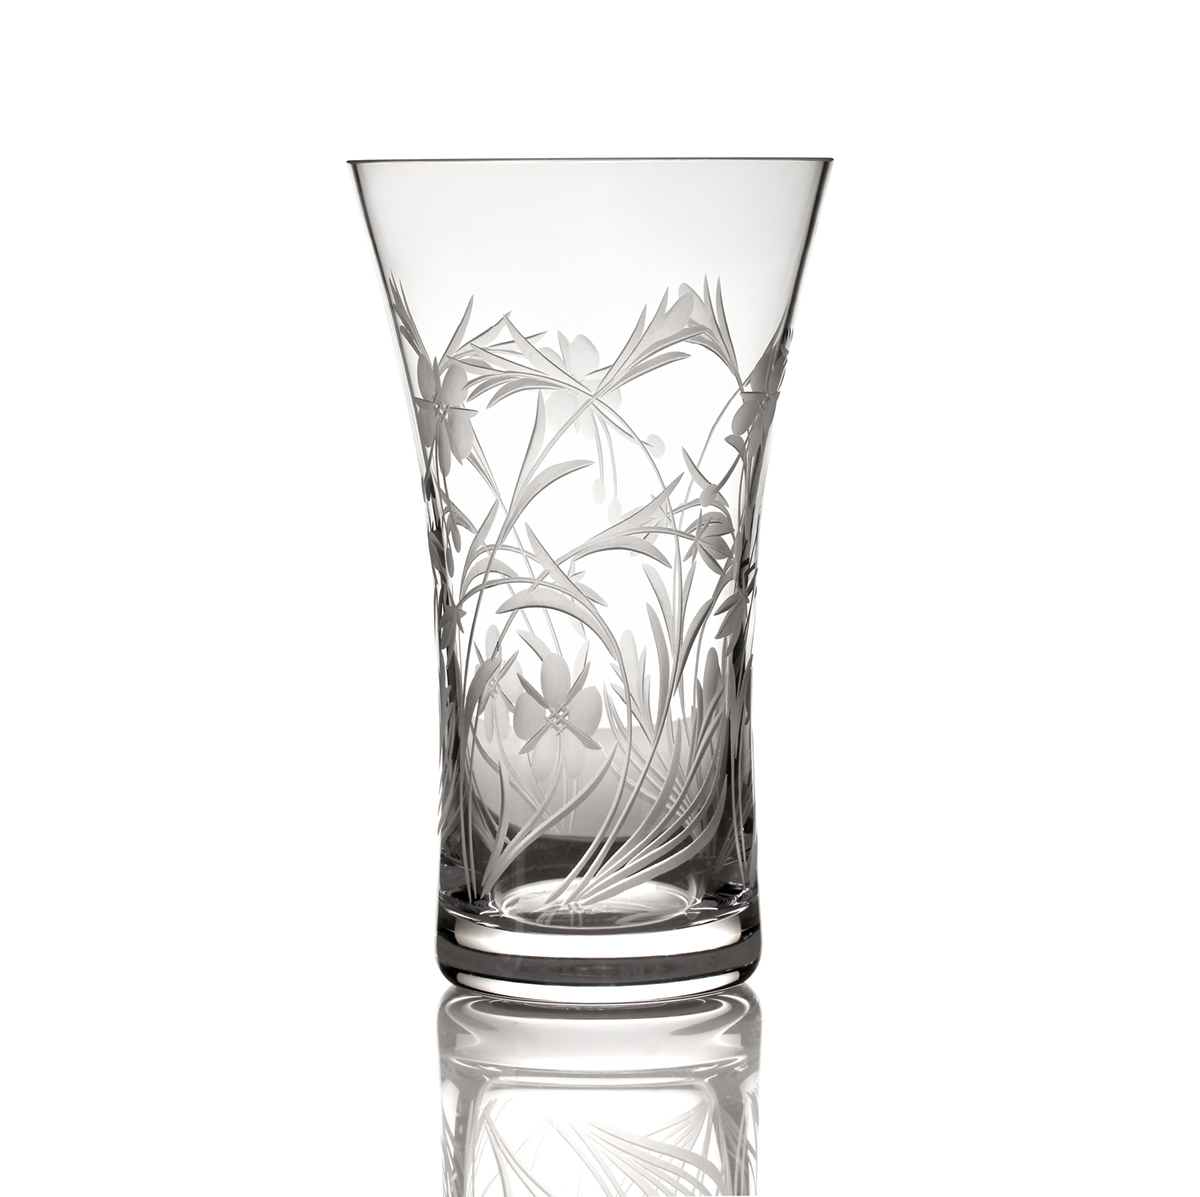 Meadow Flower Flared Vase - Kristallglas mit Wiesenblumen Muster